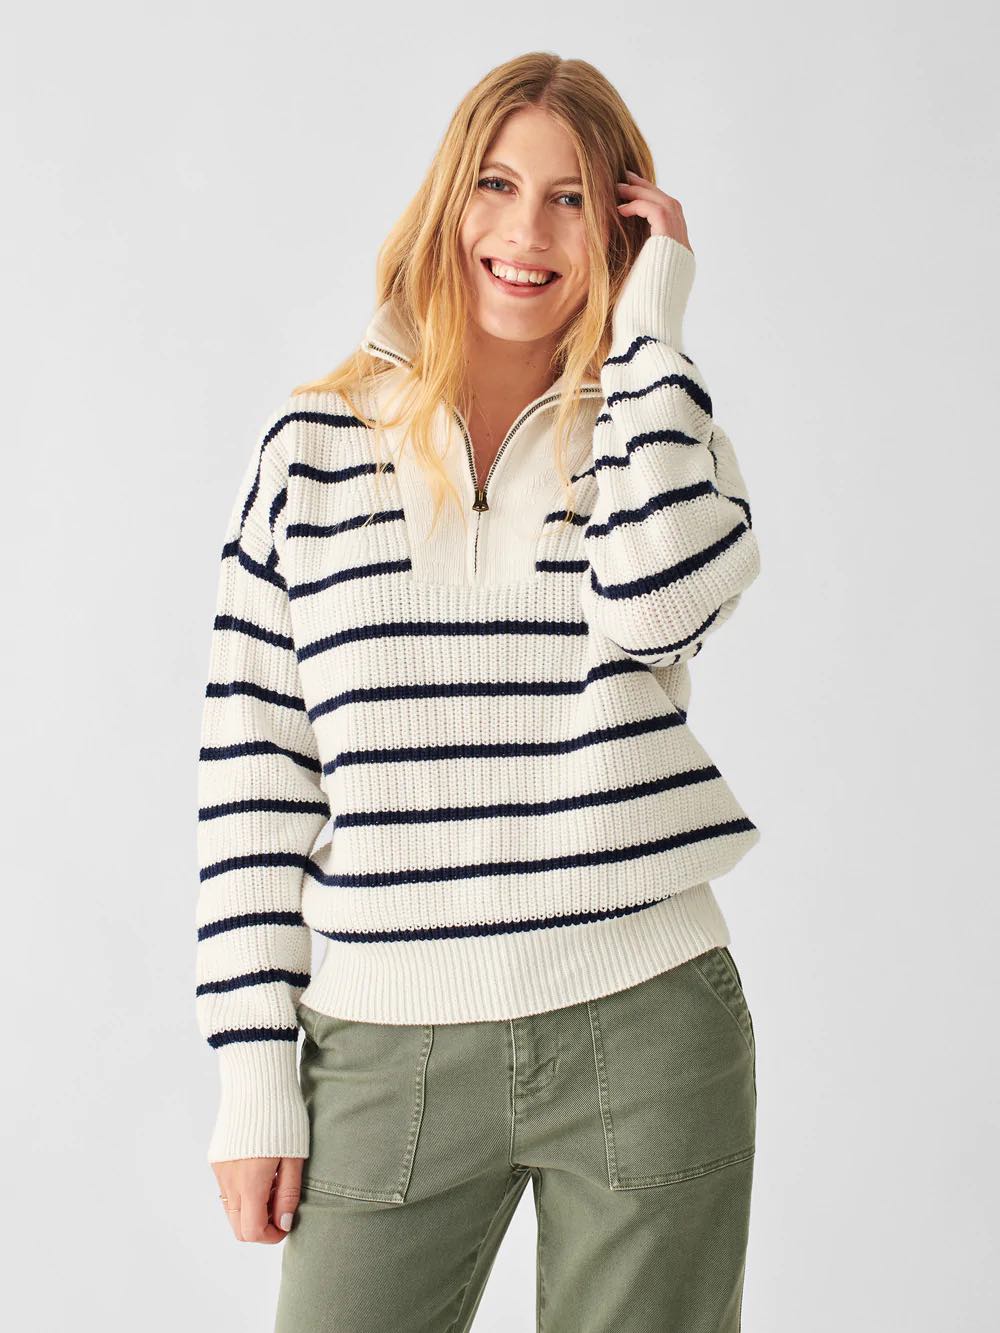 sailor sweater